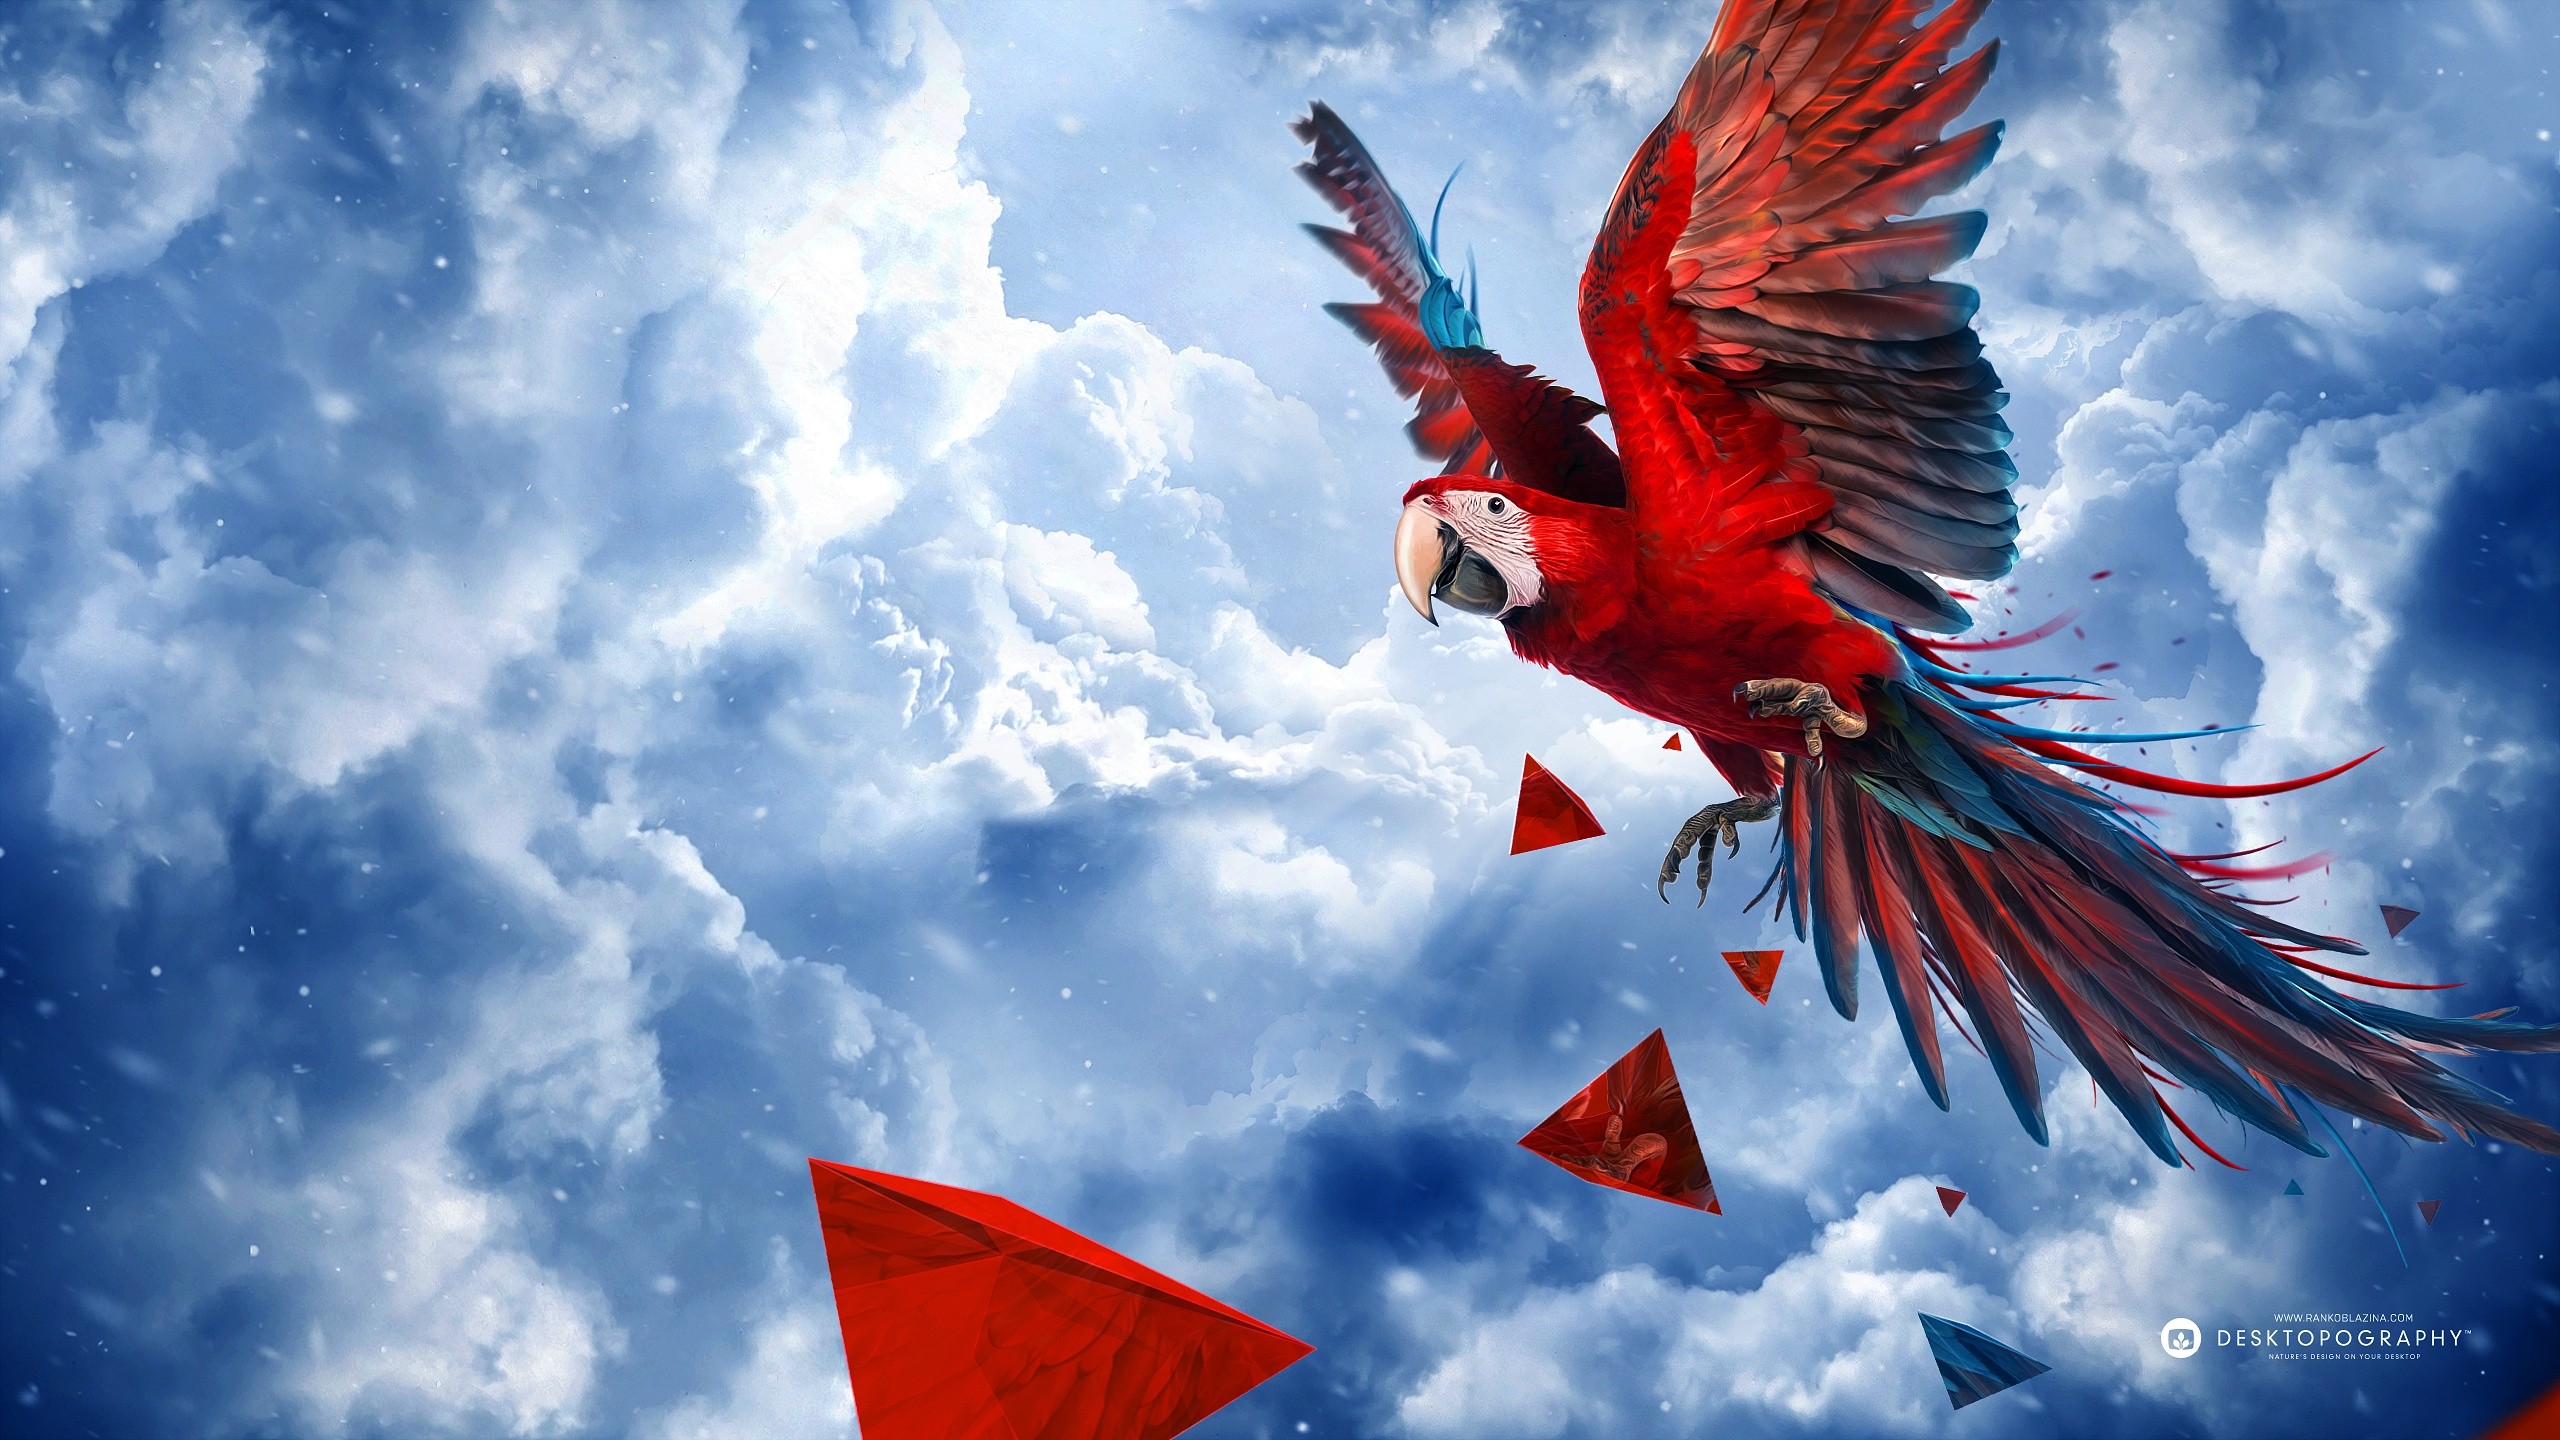 General 2560x1440 fantasy art animals birds parrot artwork Desktopography